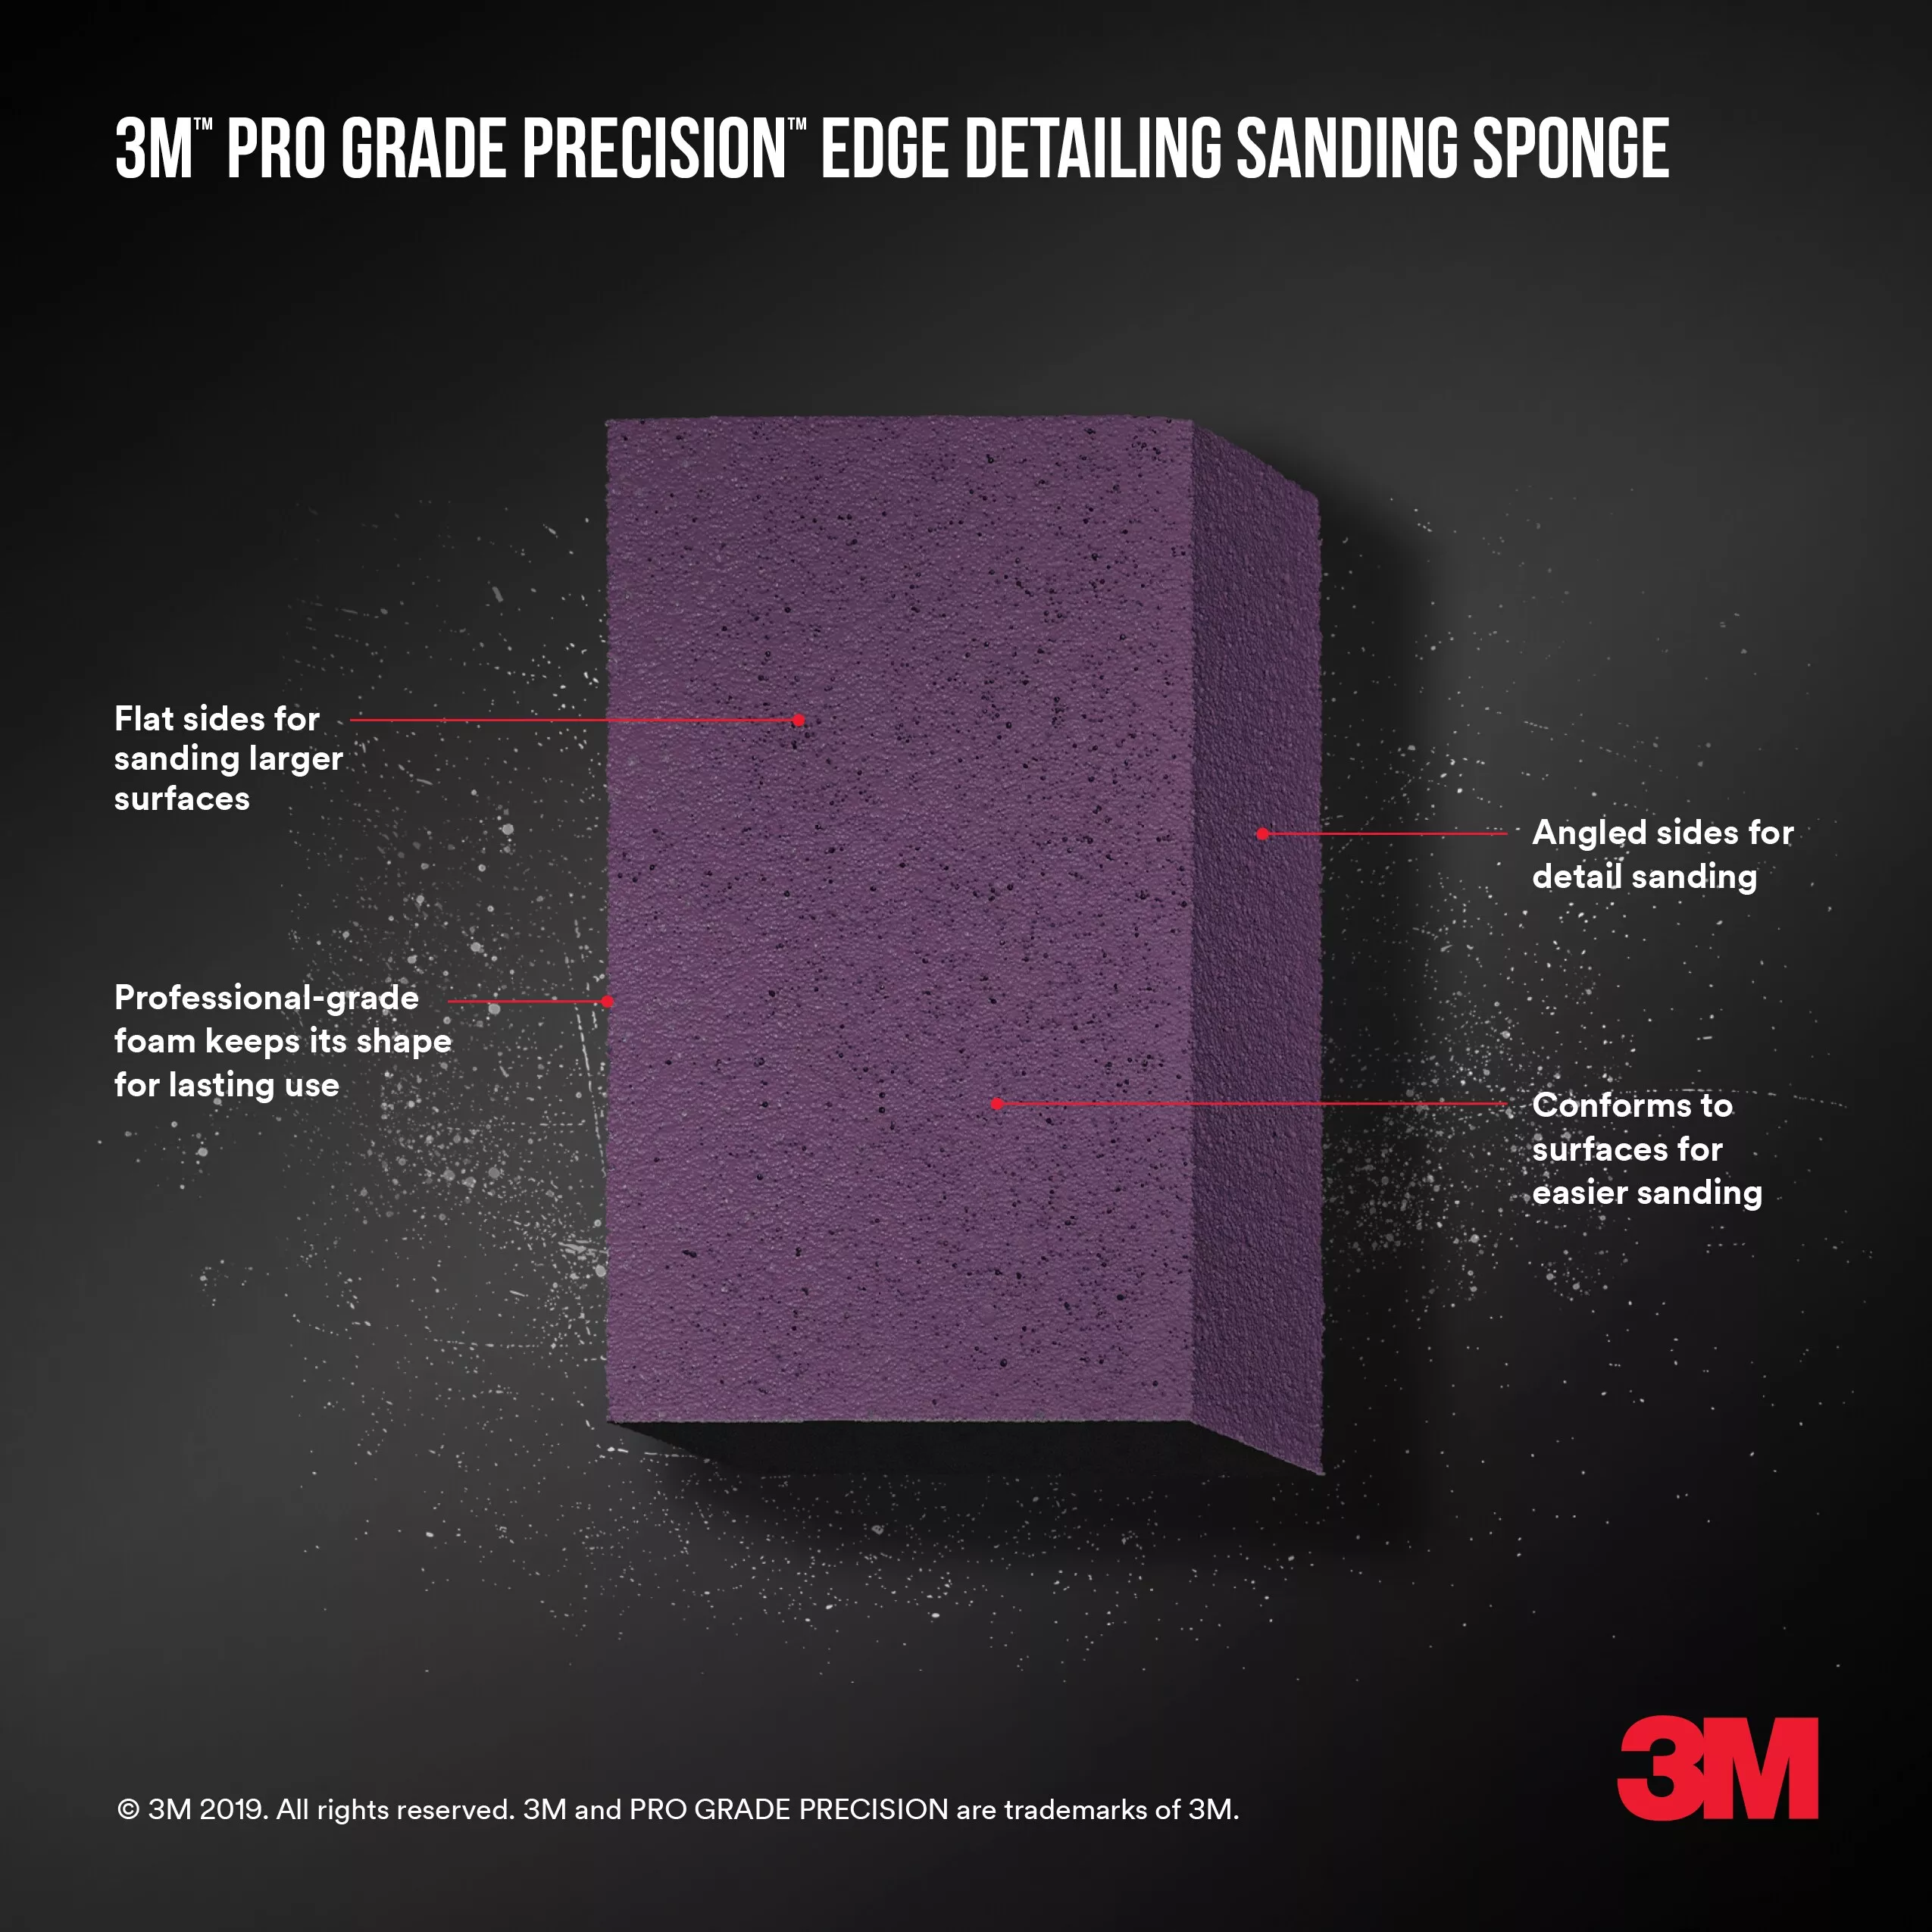 Product Number 24303TRI-XC-DA | 3M™ Pro Grade Precision™ Edge Detailing Dual Angle Sanding Sponge
24303TRI-XC-DA